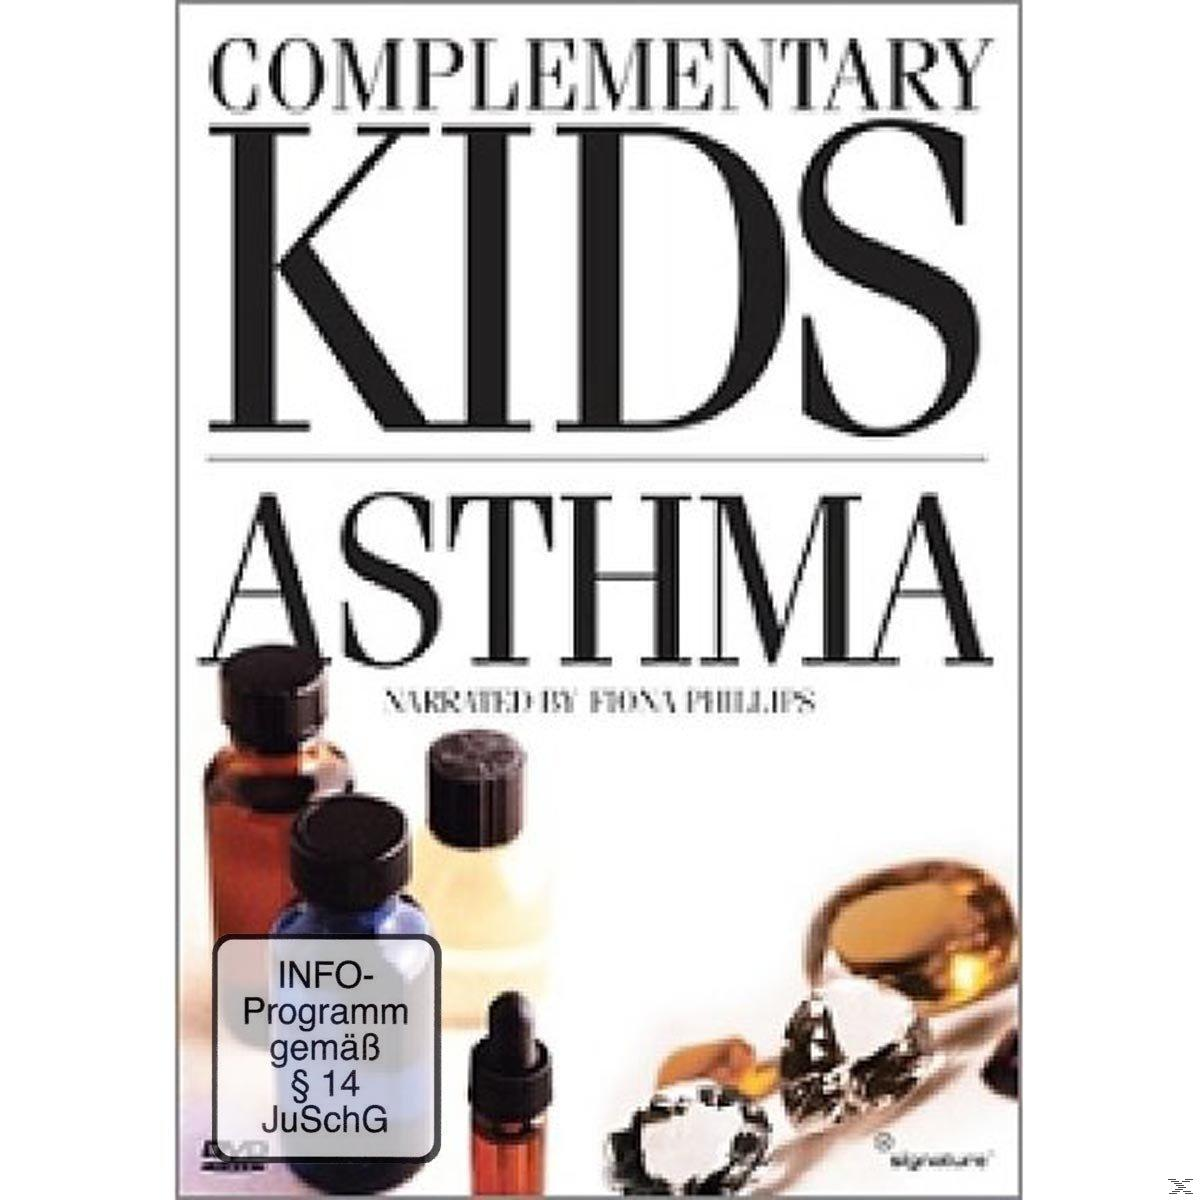 Asthma Complementary Kida DVD